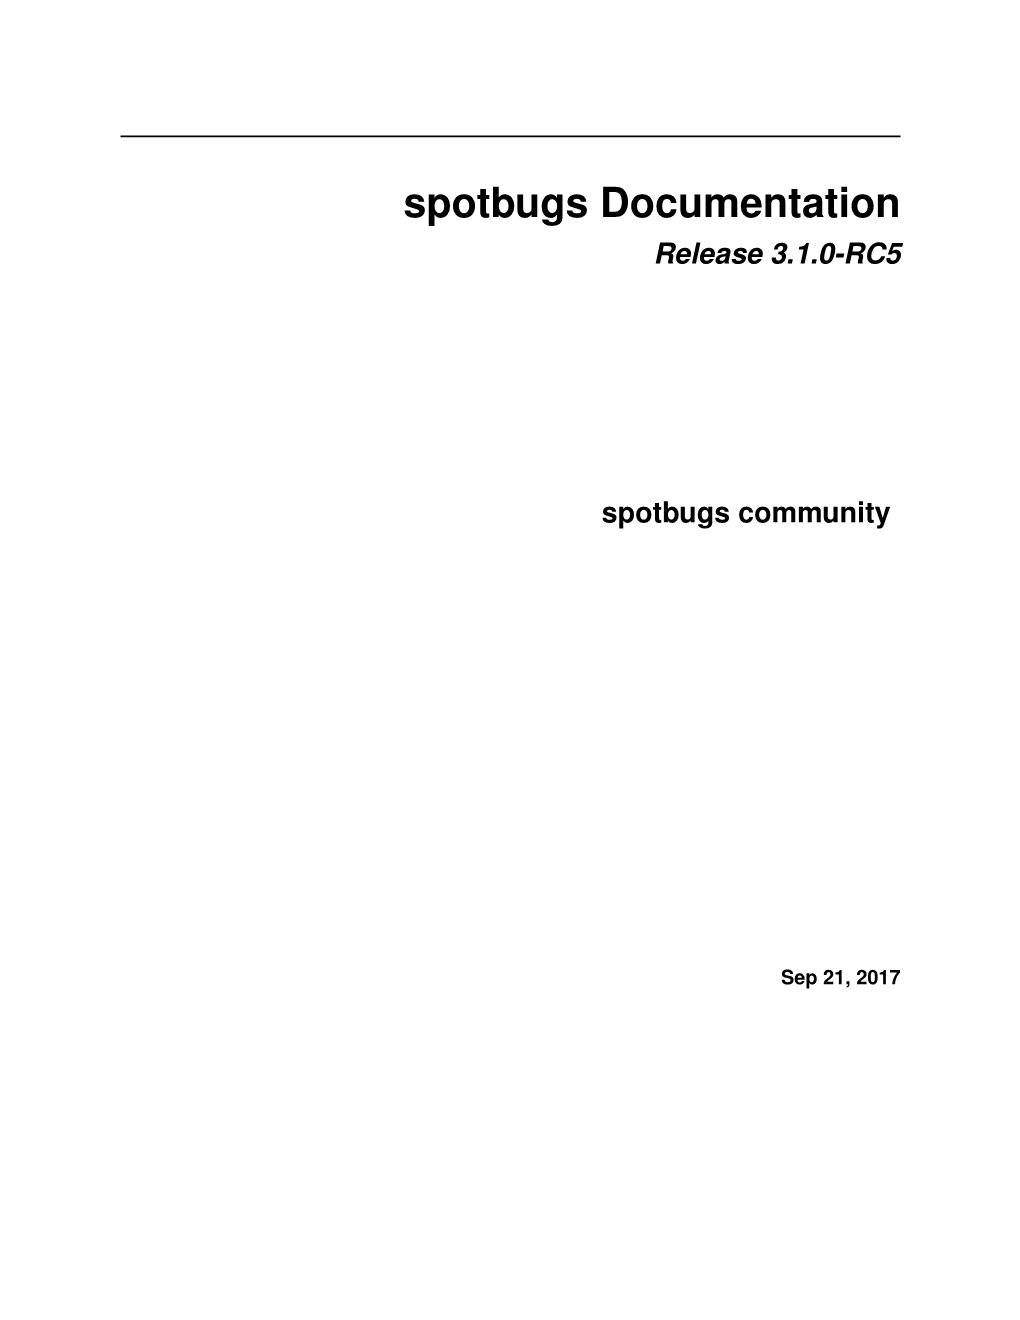 Spotbugs Documentation Release 3.1.0-RC5